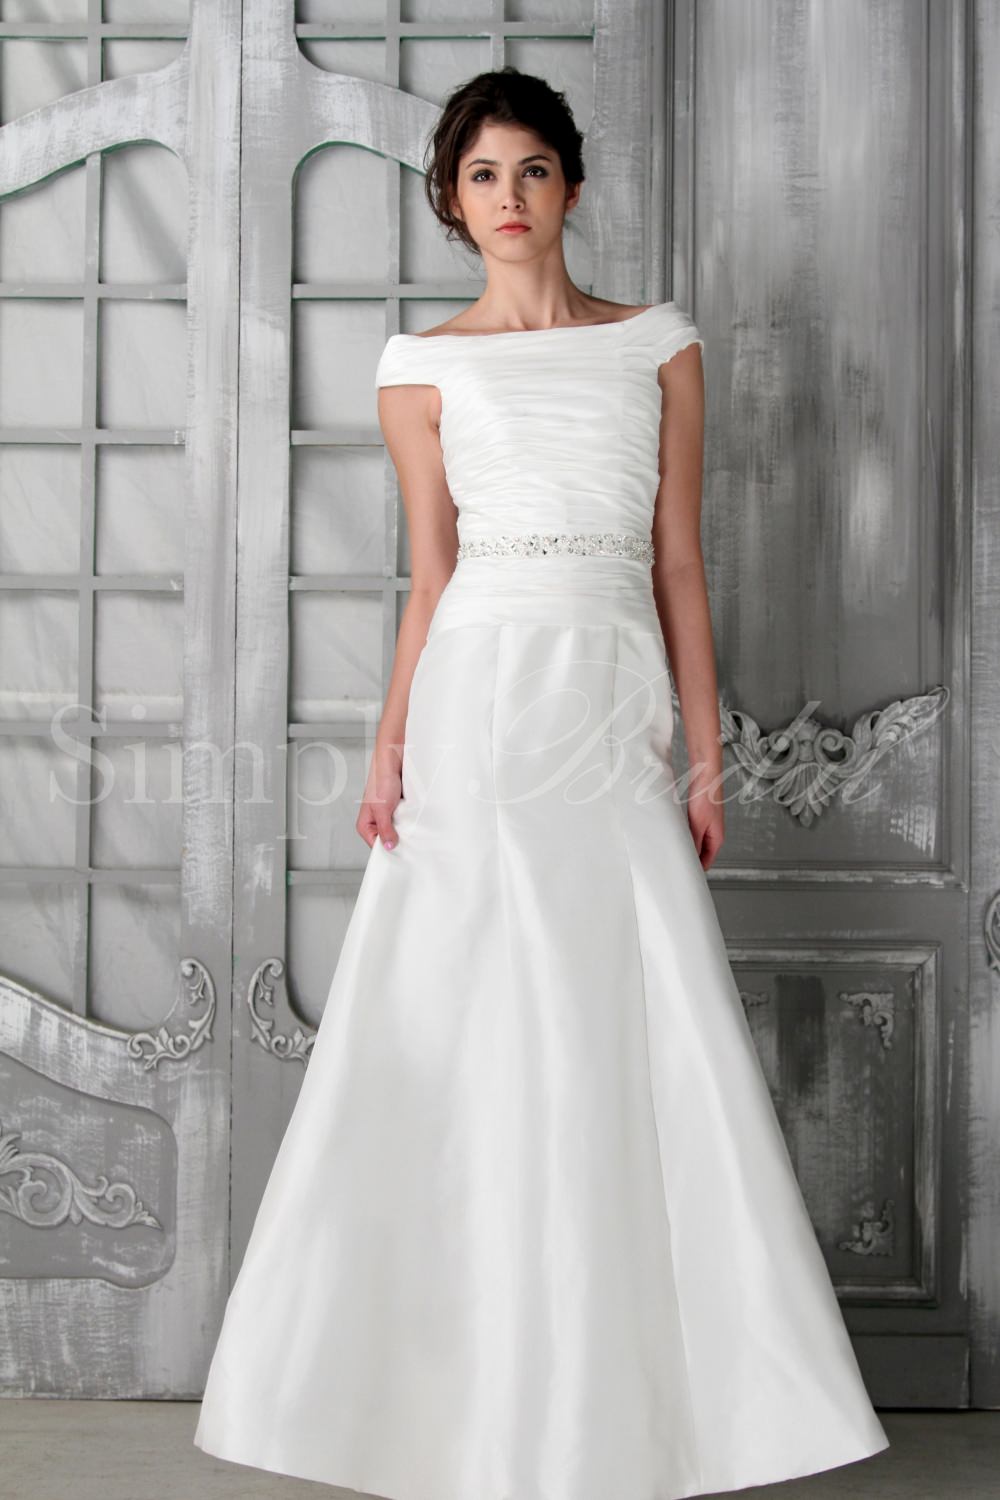 White wedding dresses montreal